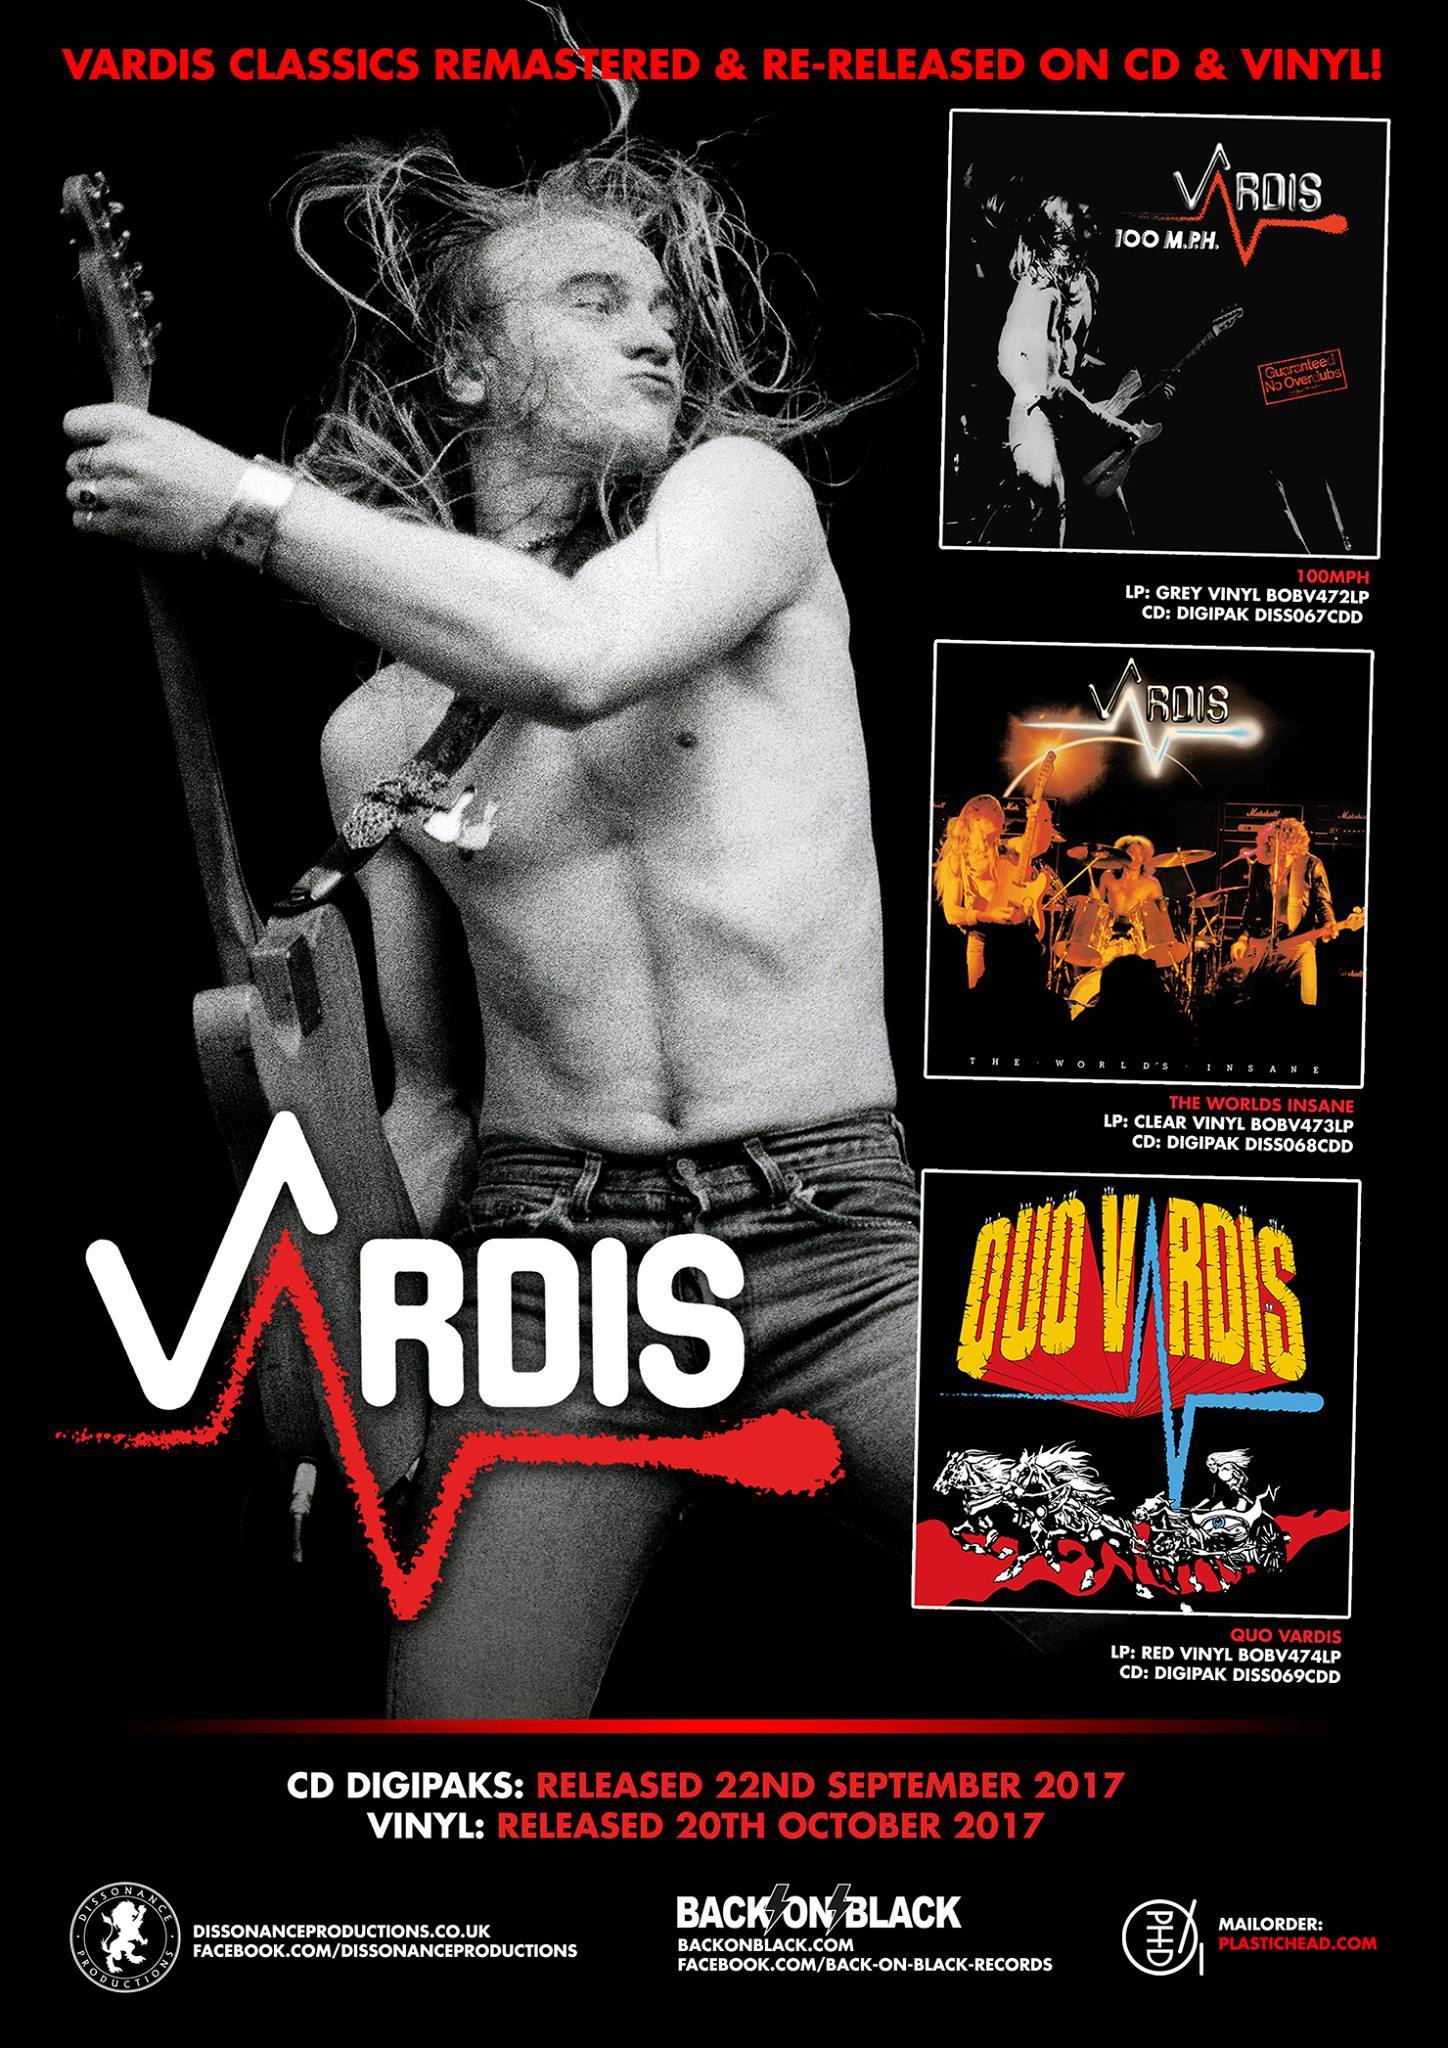 VARDIS Classics „100 MHP“, „The World’s Insane“, „Quo Vardis“ Remastered & Re-Released on CD & Vinyl